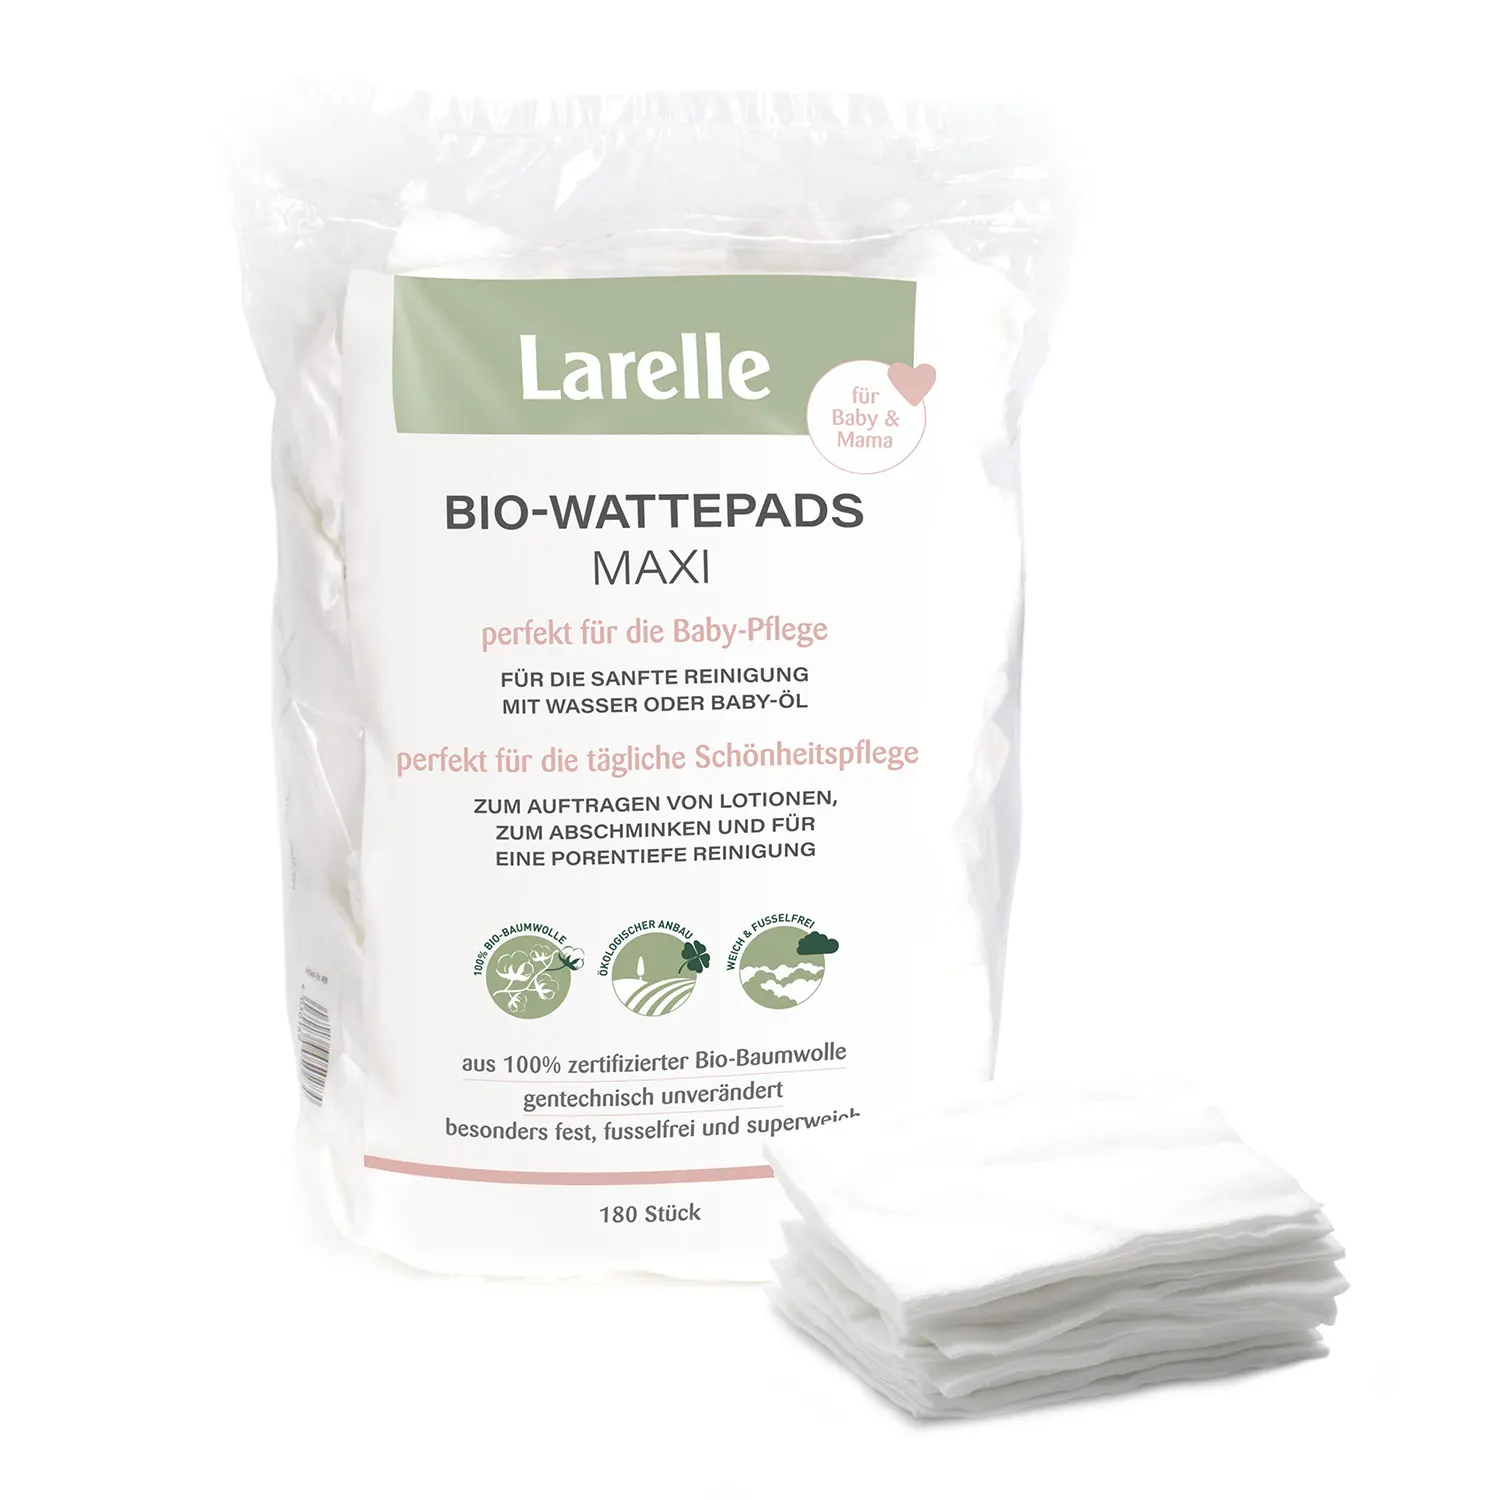 491 Larelle Bio-Wattepads Maxi